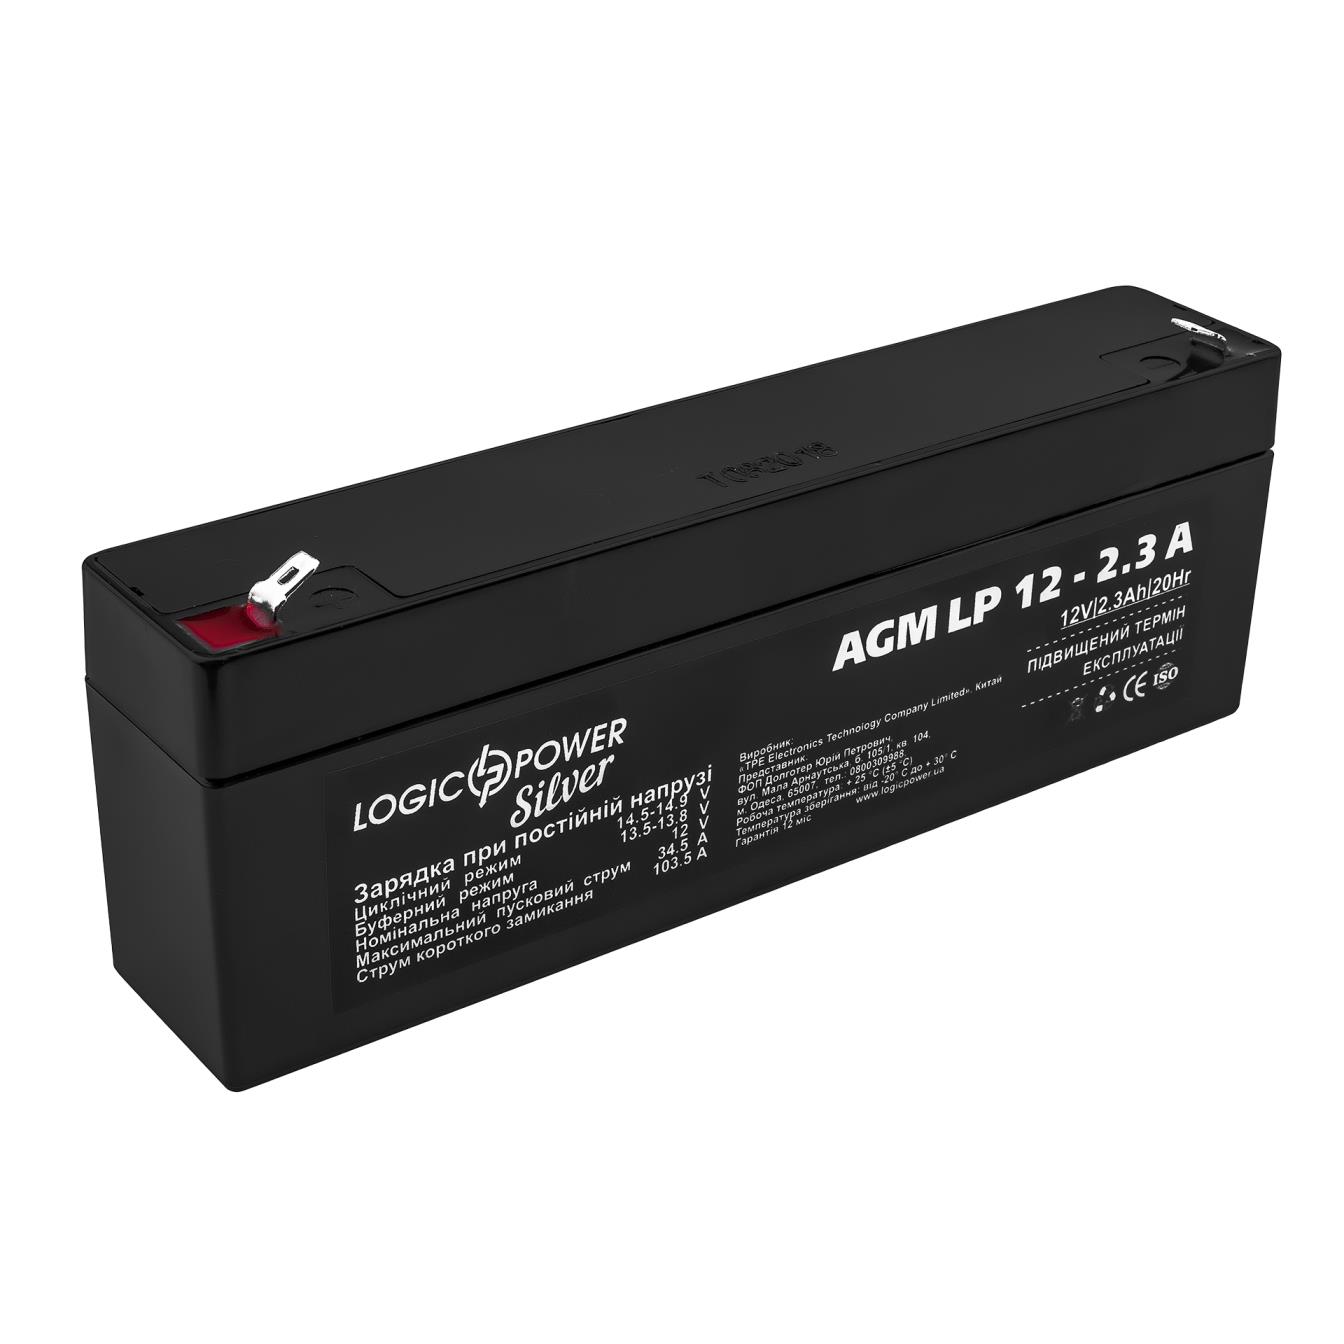 Аккумулятор свинцово-кислотный LogicPower AGM LP 12V - 2.3 Ah Silver (3224)